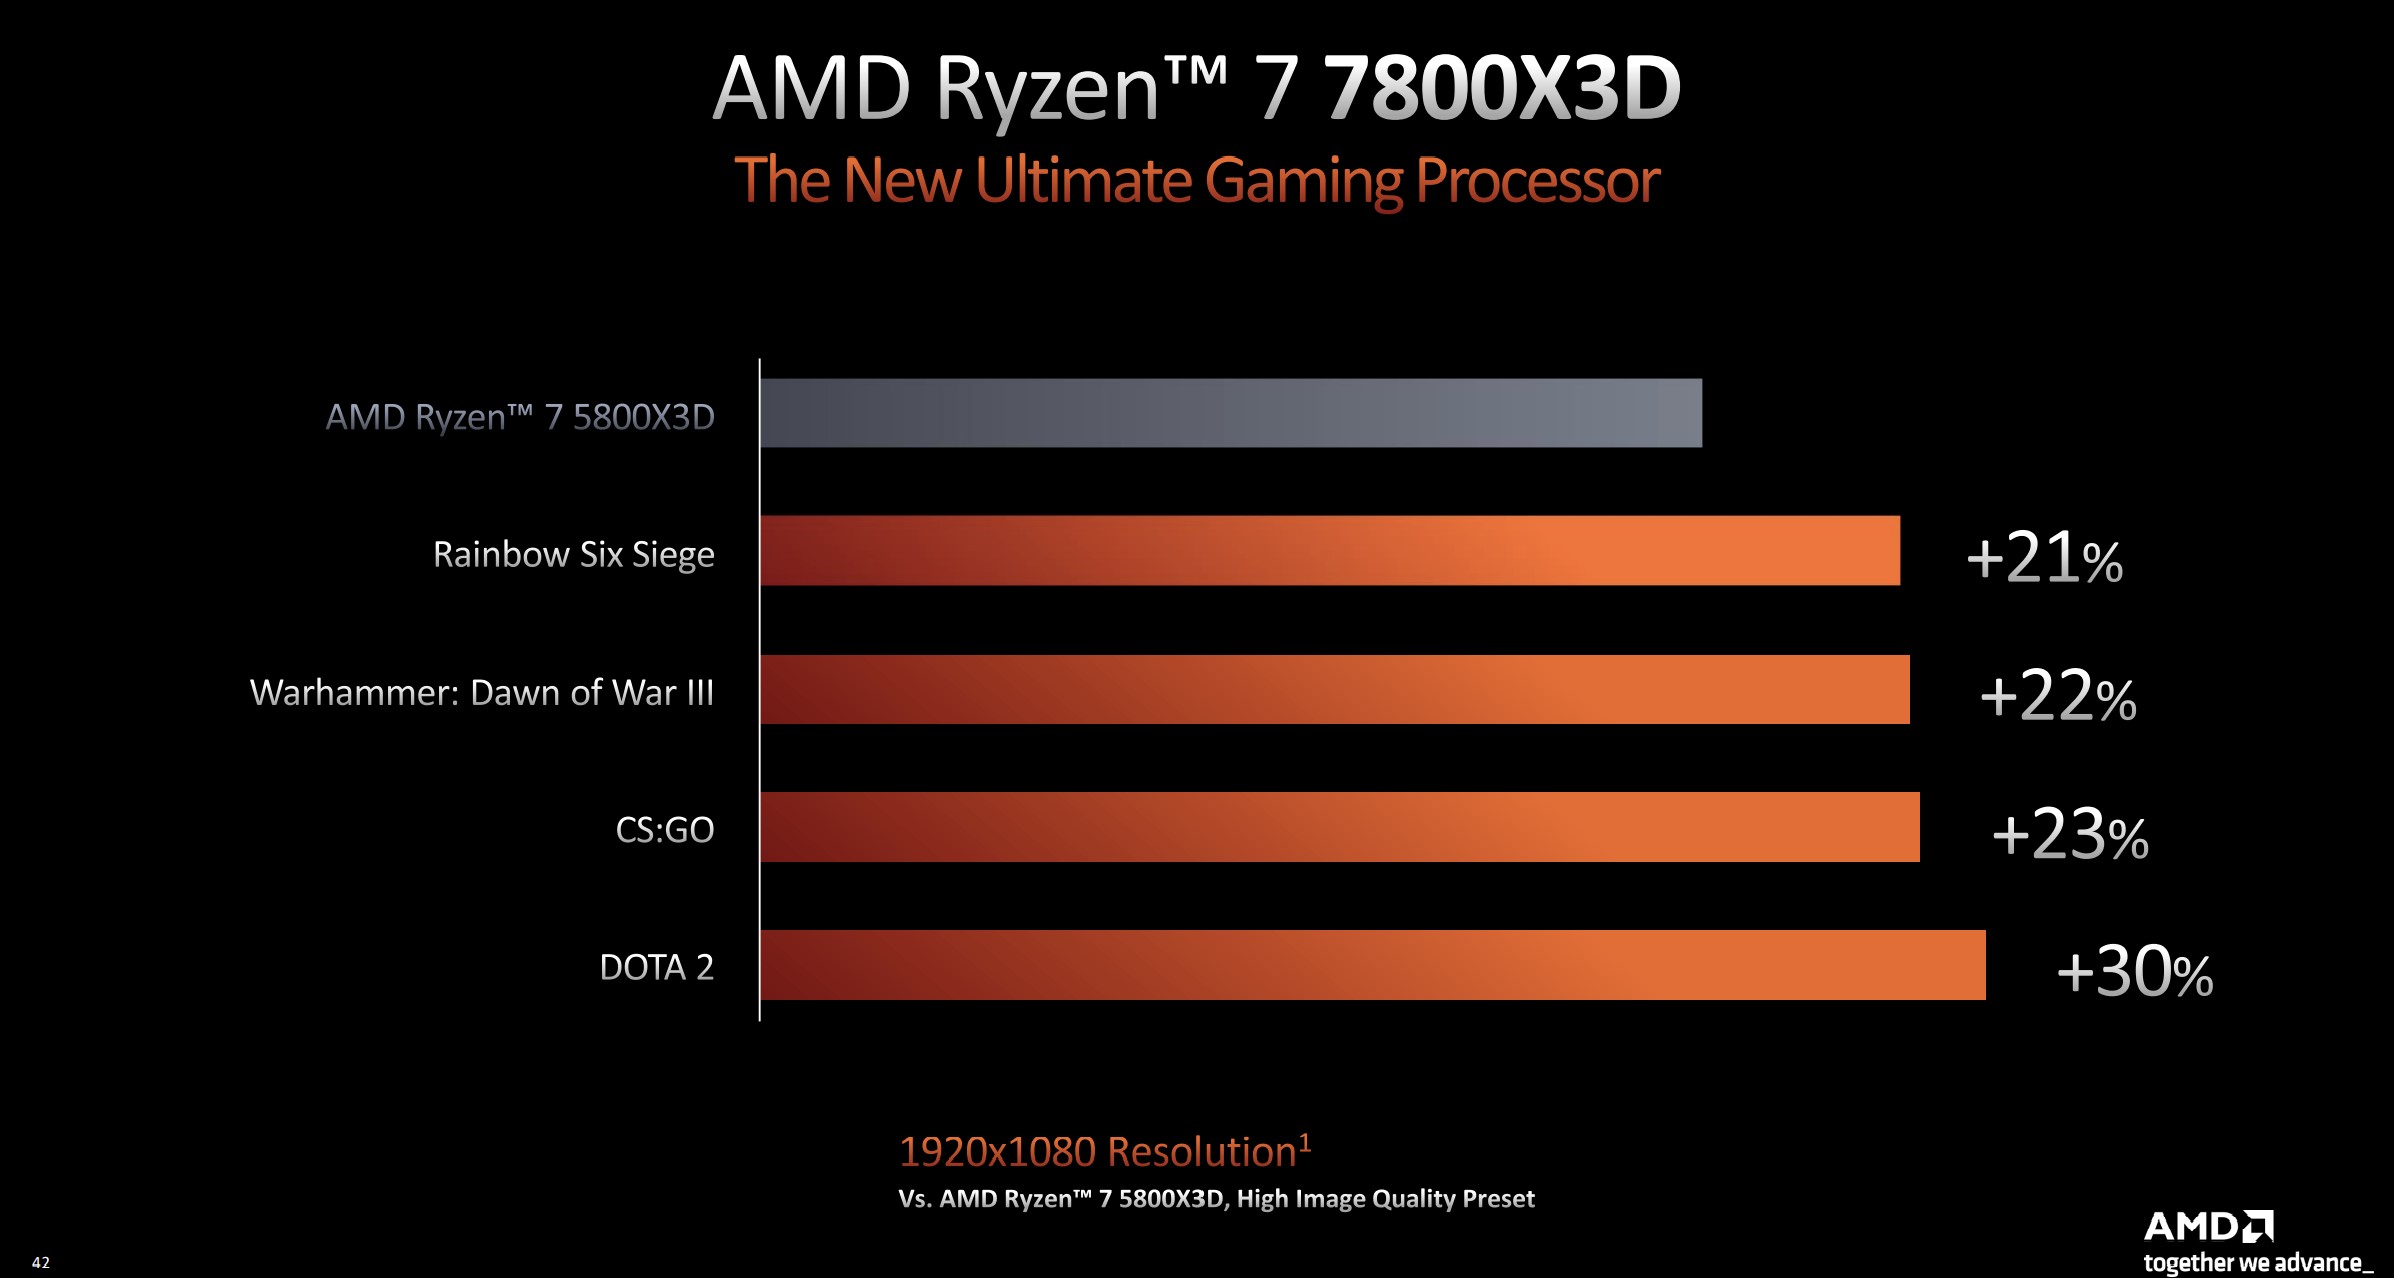 AMD Ryzen™ 7 7800X3D Gaming Processor